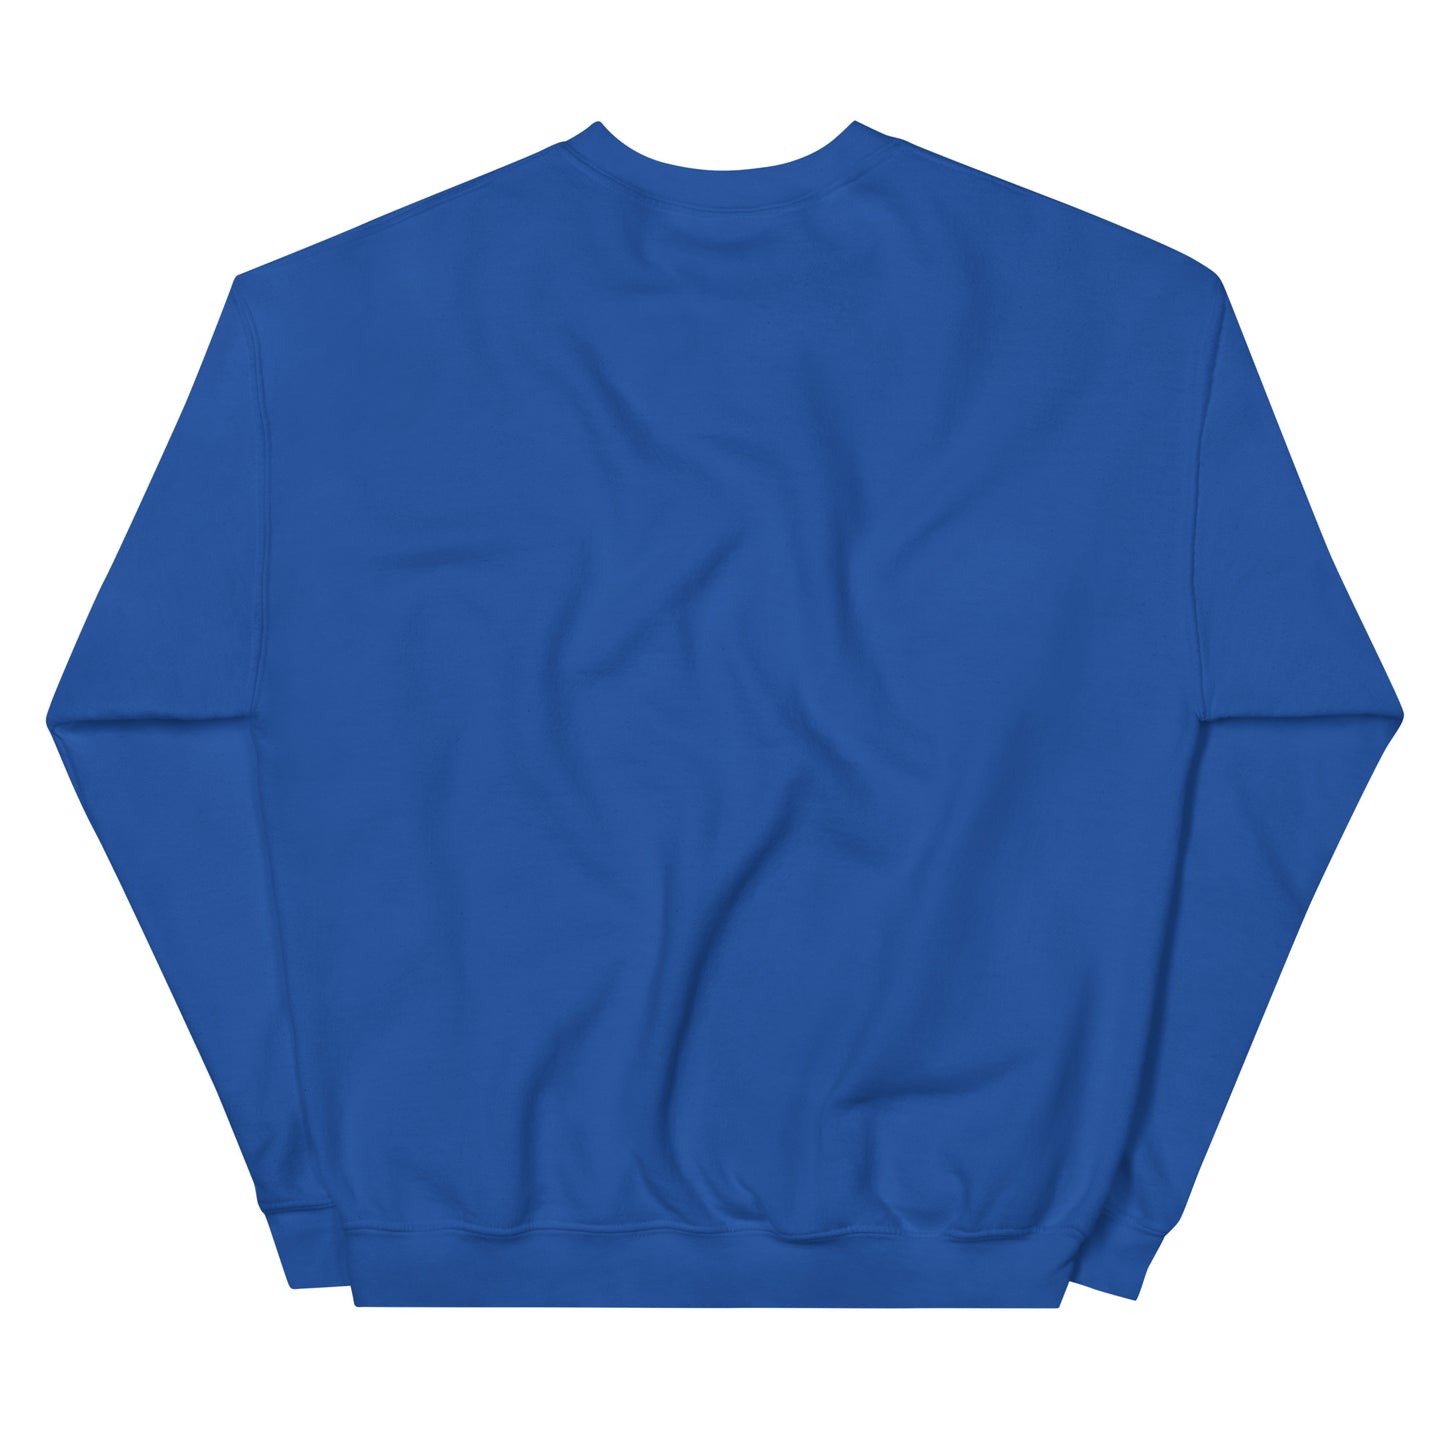 NEQ CHAMPS - VB on right sleeve - Unisex Sweatshirt